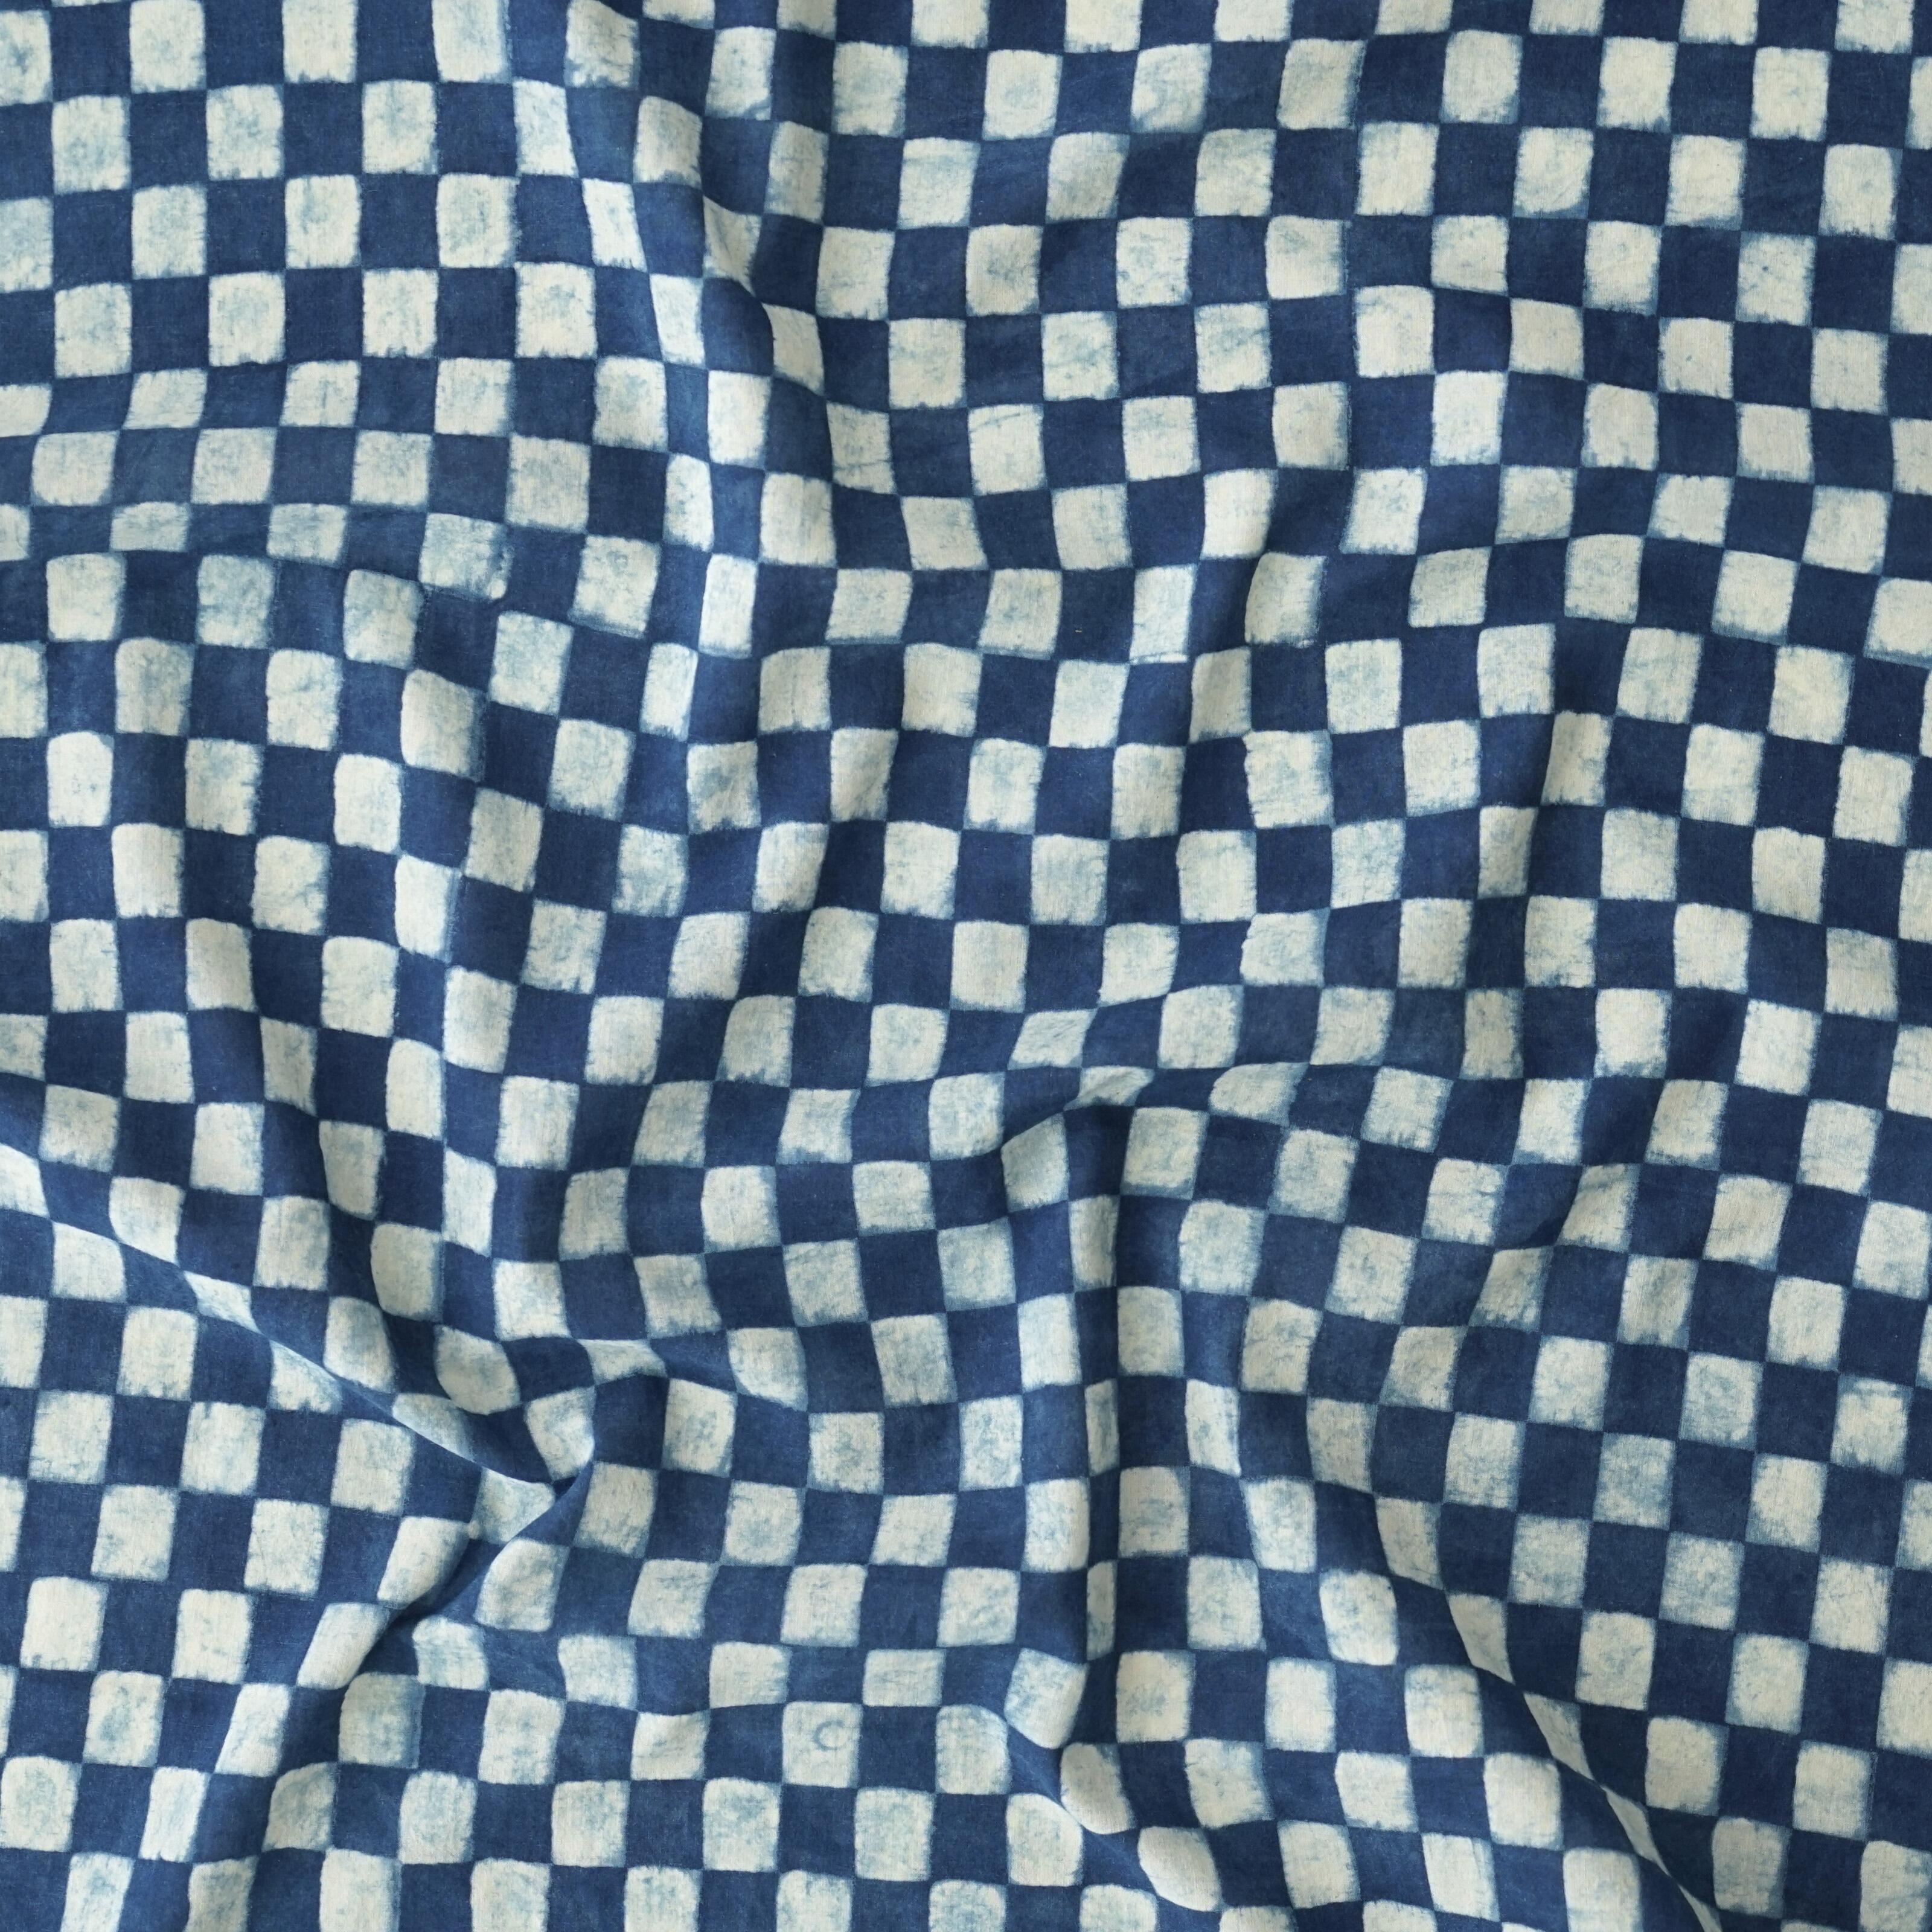 Block-Printed Cotton - Checkers Print - Indigo Dyed - Contrast